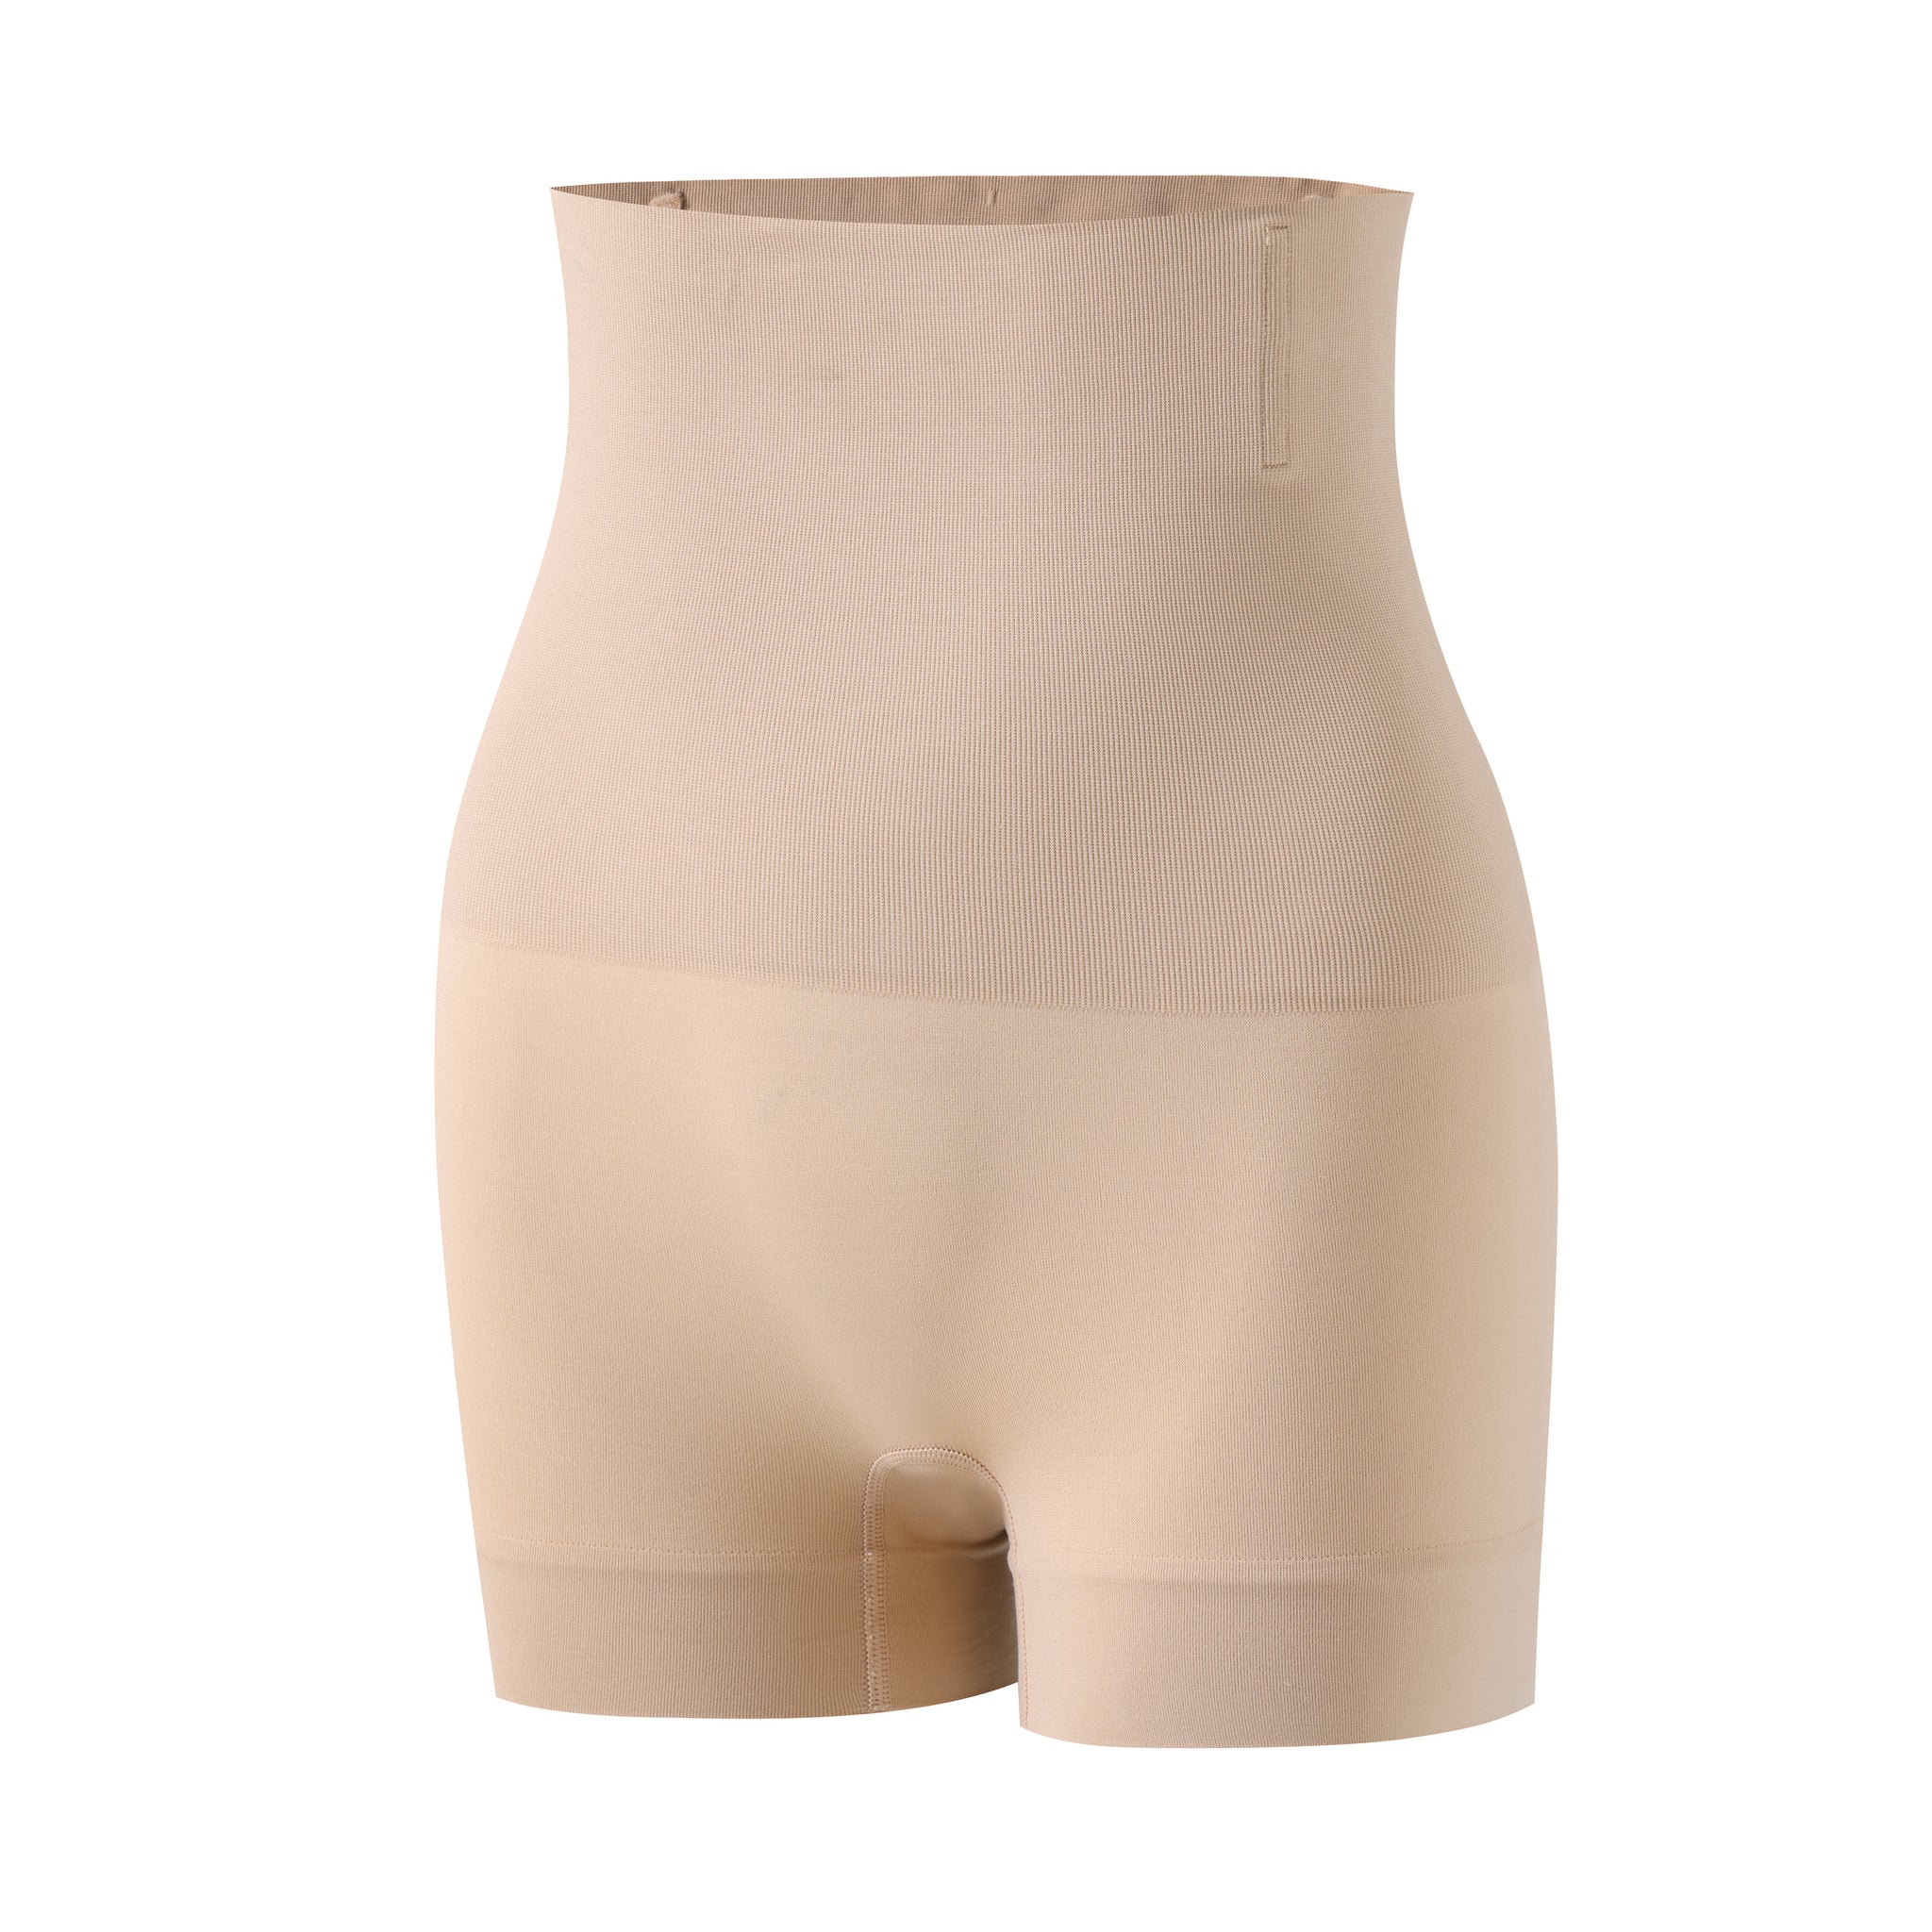 Werena Underwear Small Tan Thong Tummy Control Shaper Panty High Waist w/  Boning